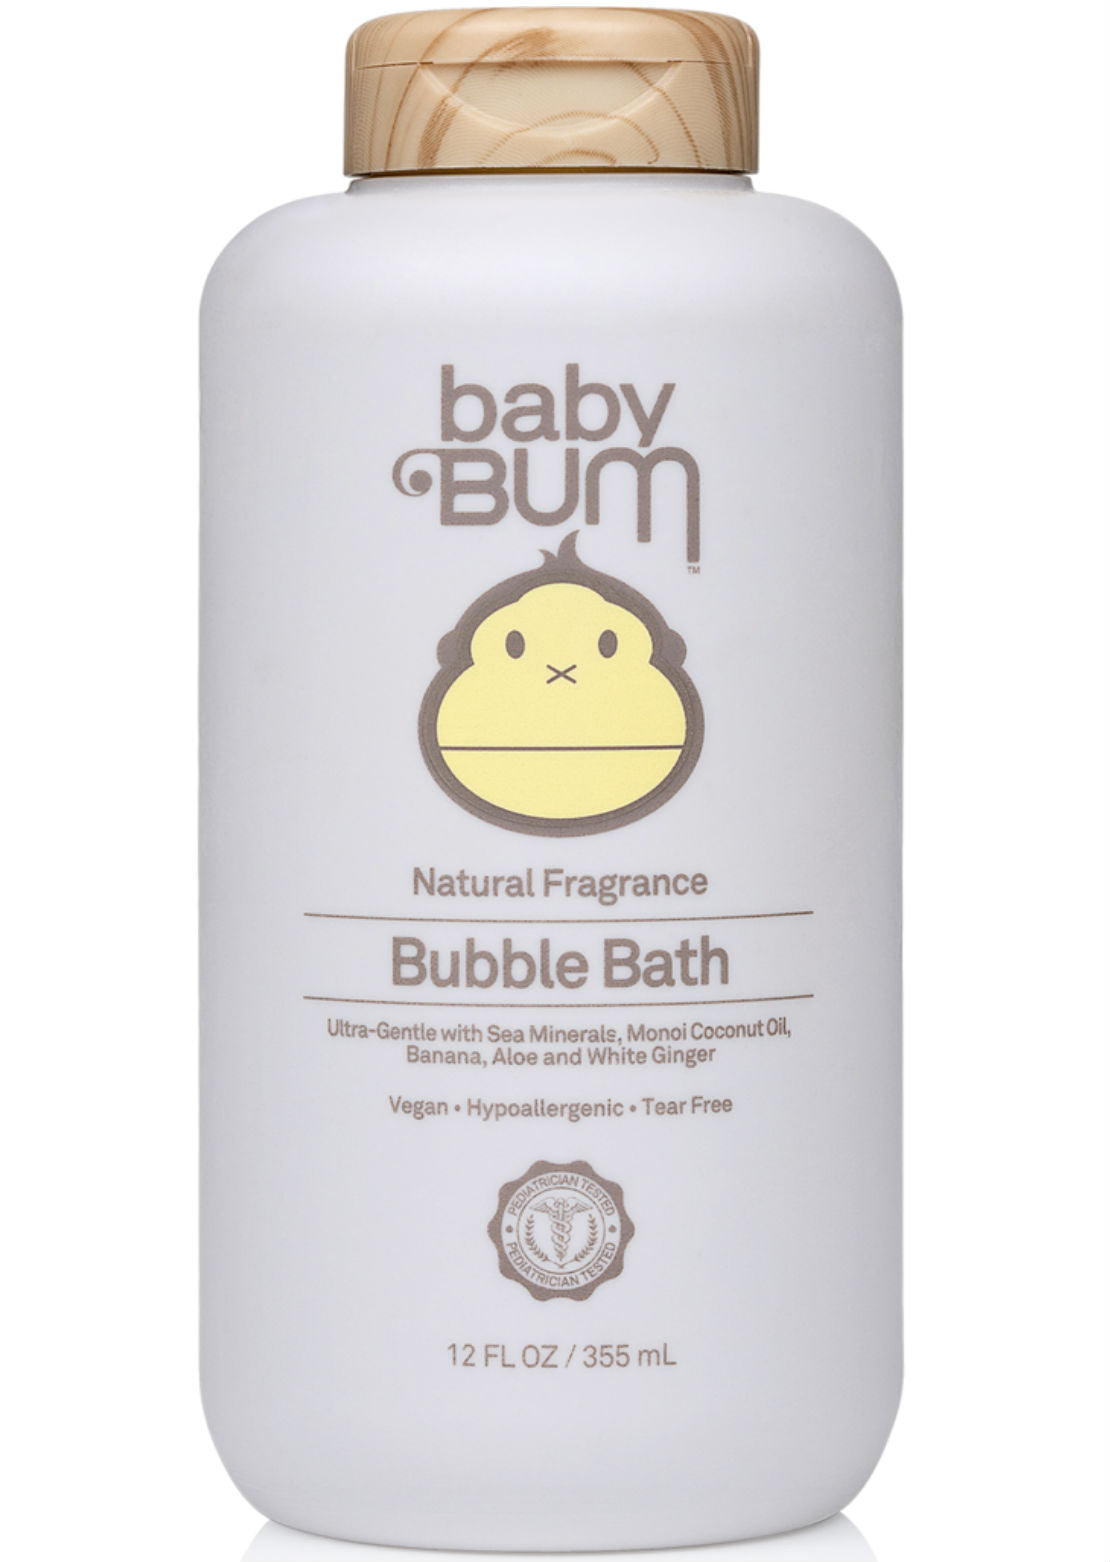 Sun Bum Baby Bum Bubble Bath